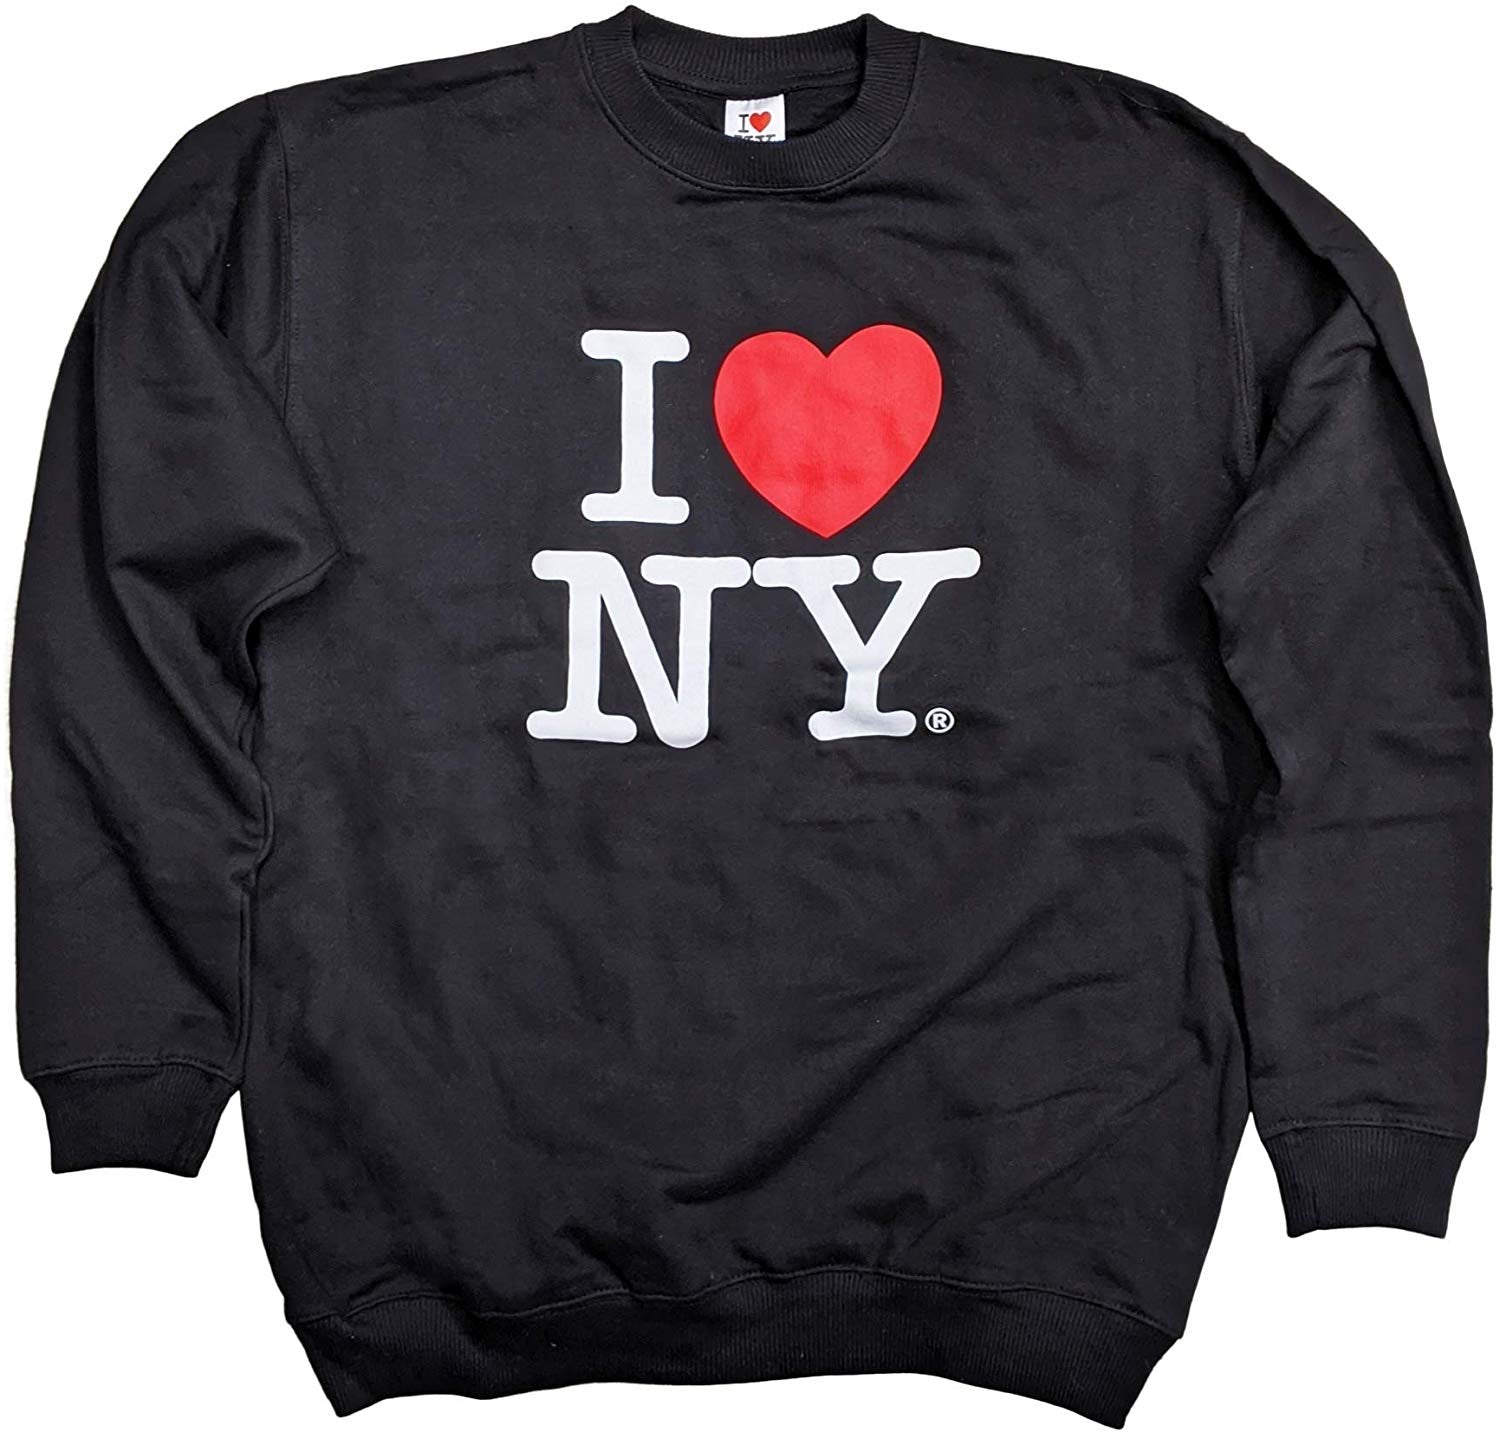 I Love NY Crewneck Sweatshirt Officially Licensed (Adult Unisex, Black)